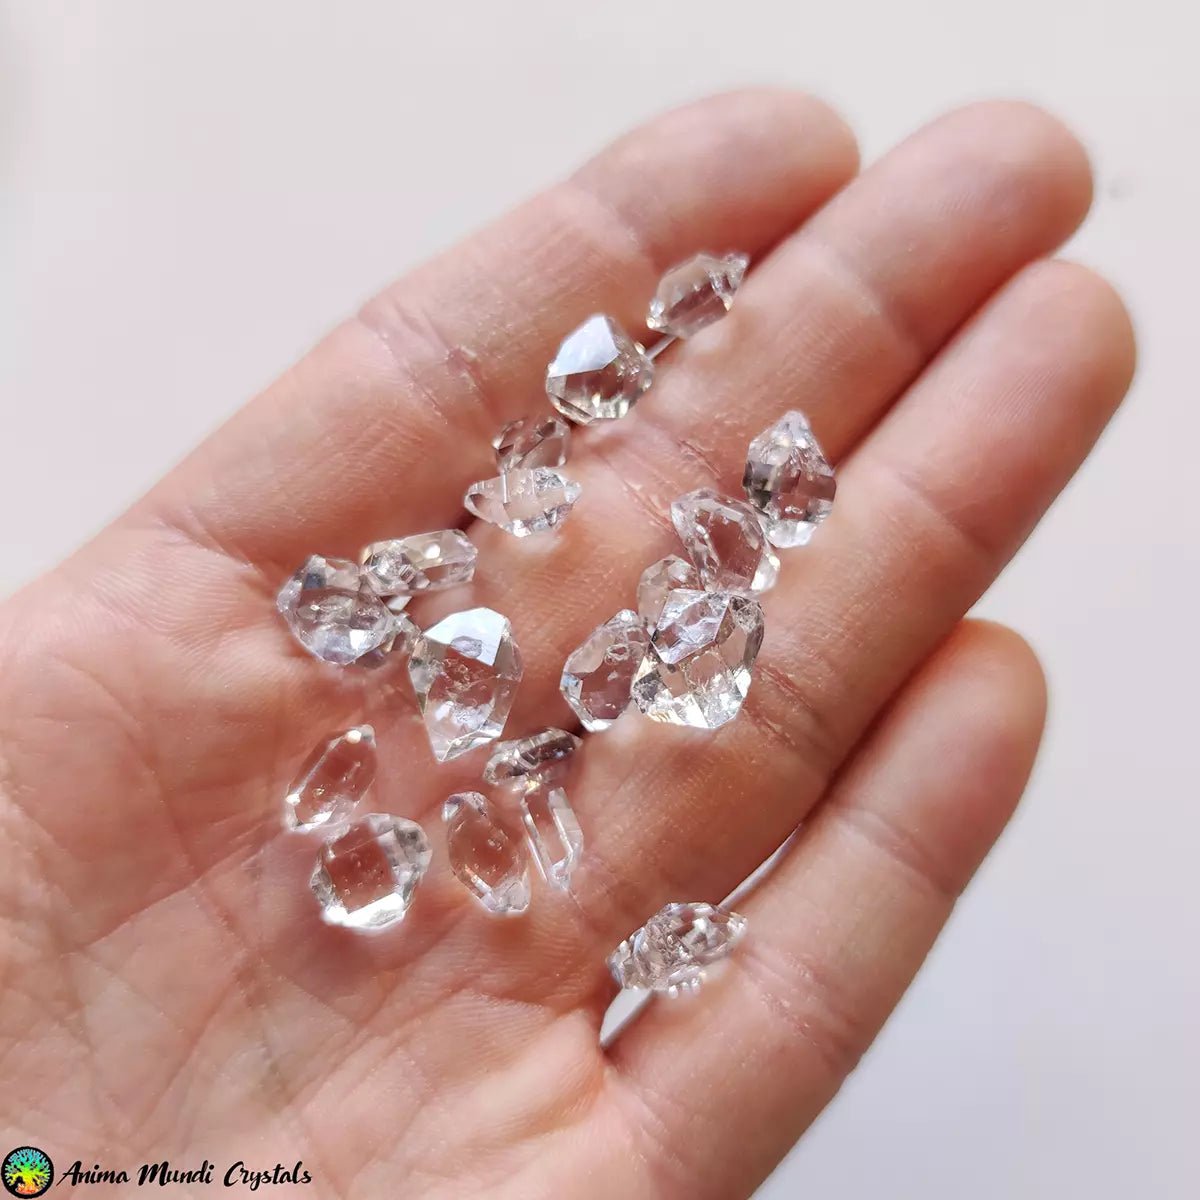 Over 10mm Diamond Quartz Crystals - Anima Mundi Crystals